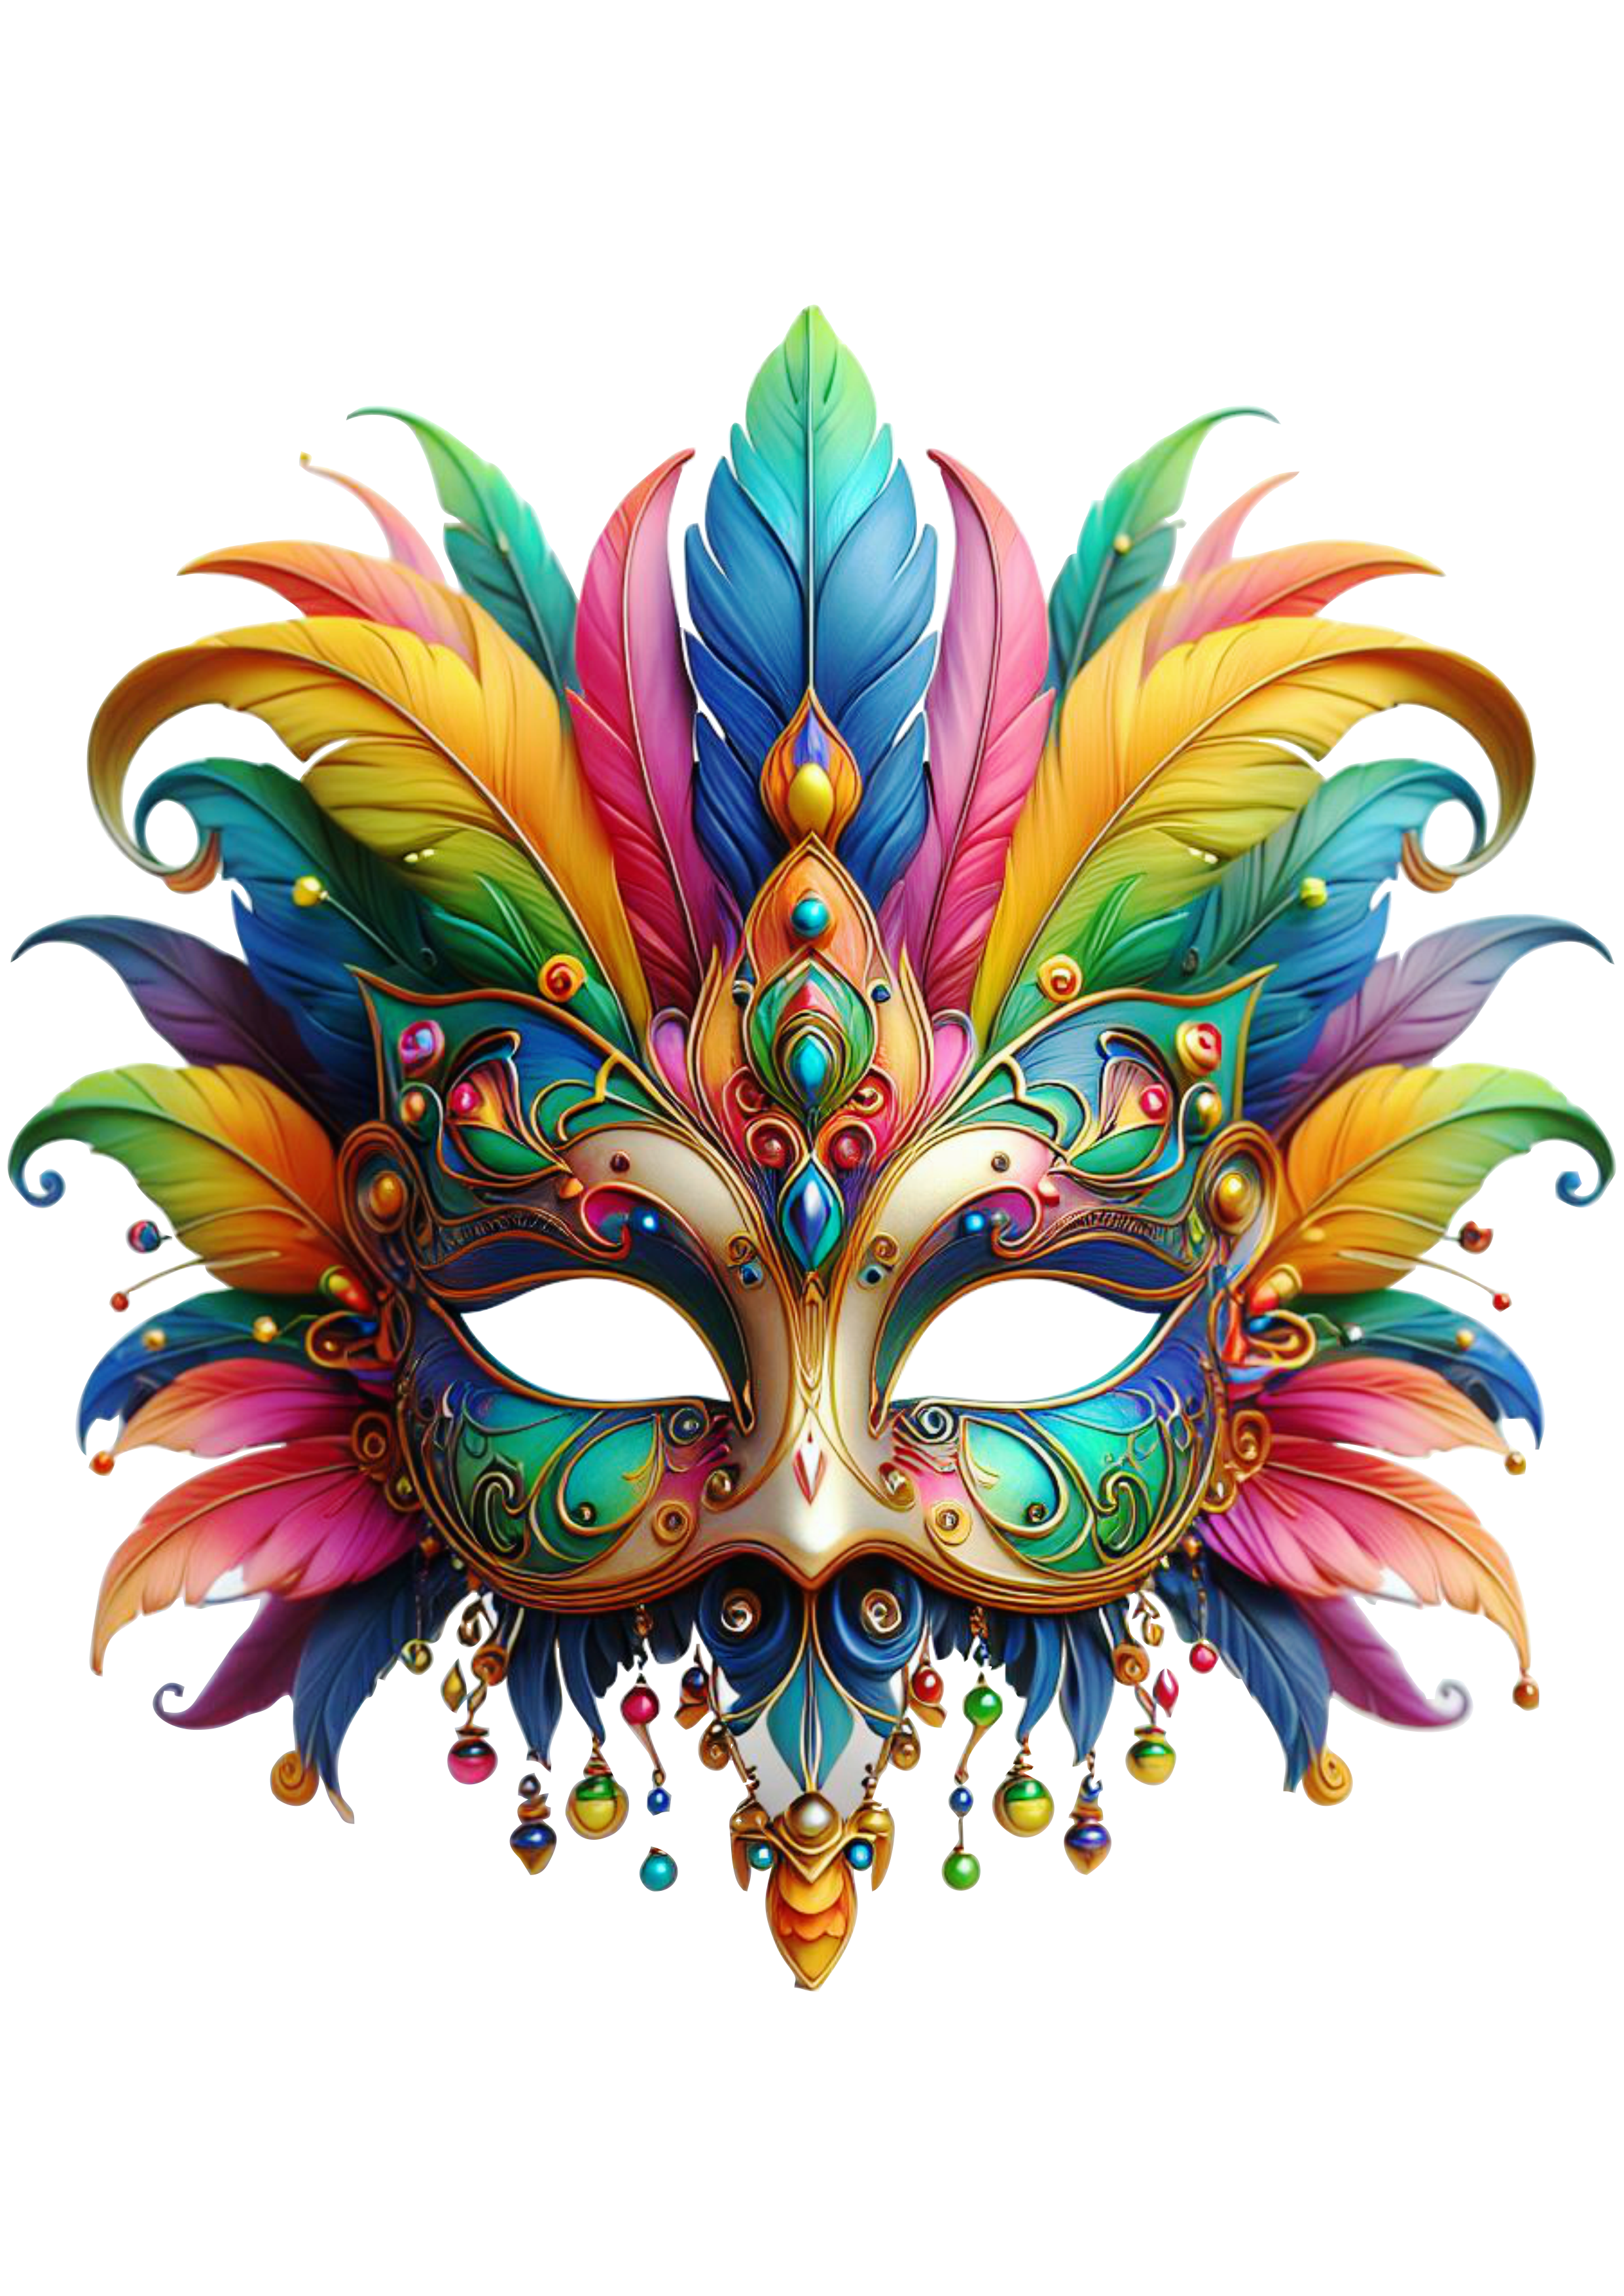 Máscara de carnaval brilhante joias baile de máscaras png penas coloridas artes gráficas escola de samba molde para imprimir